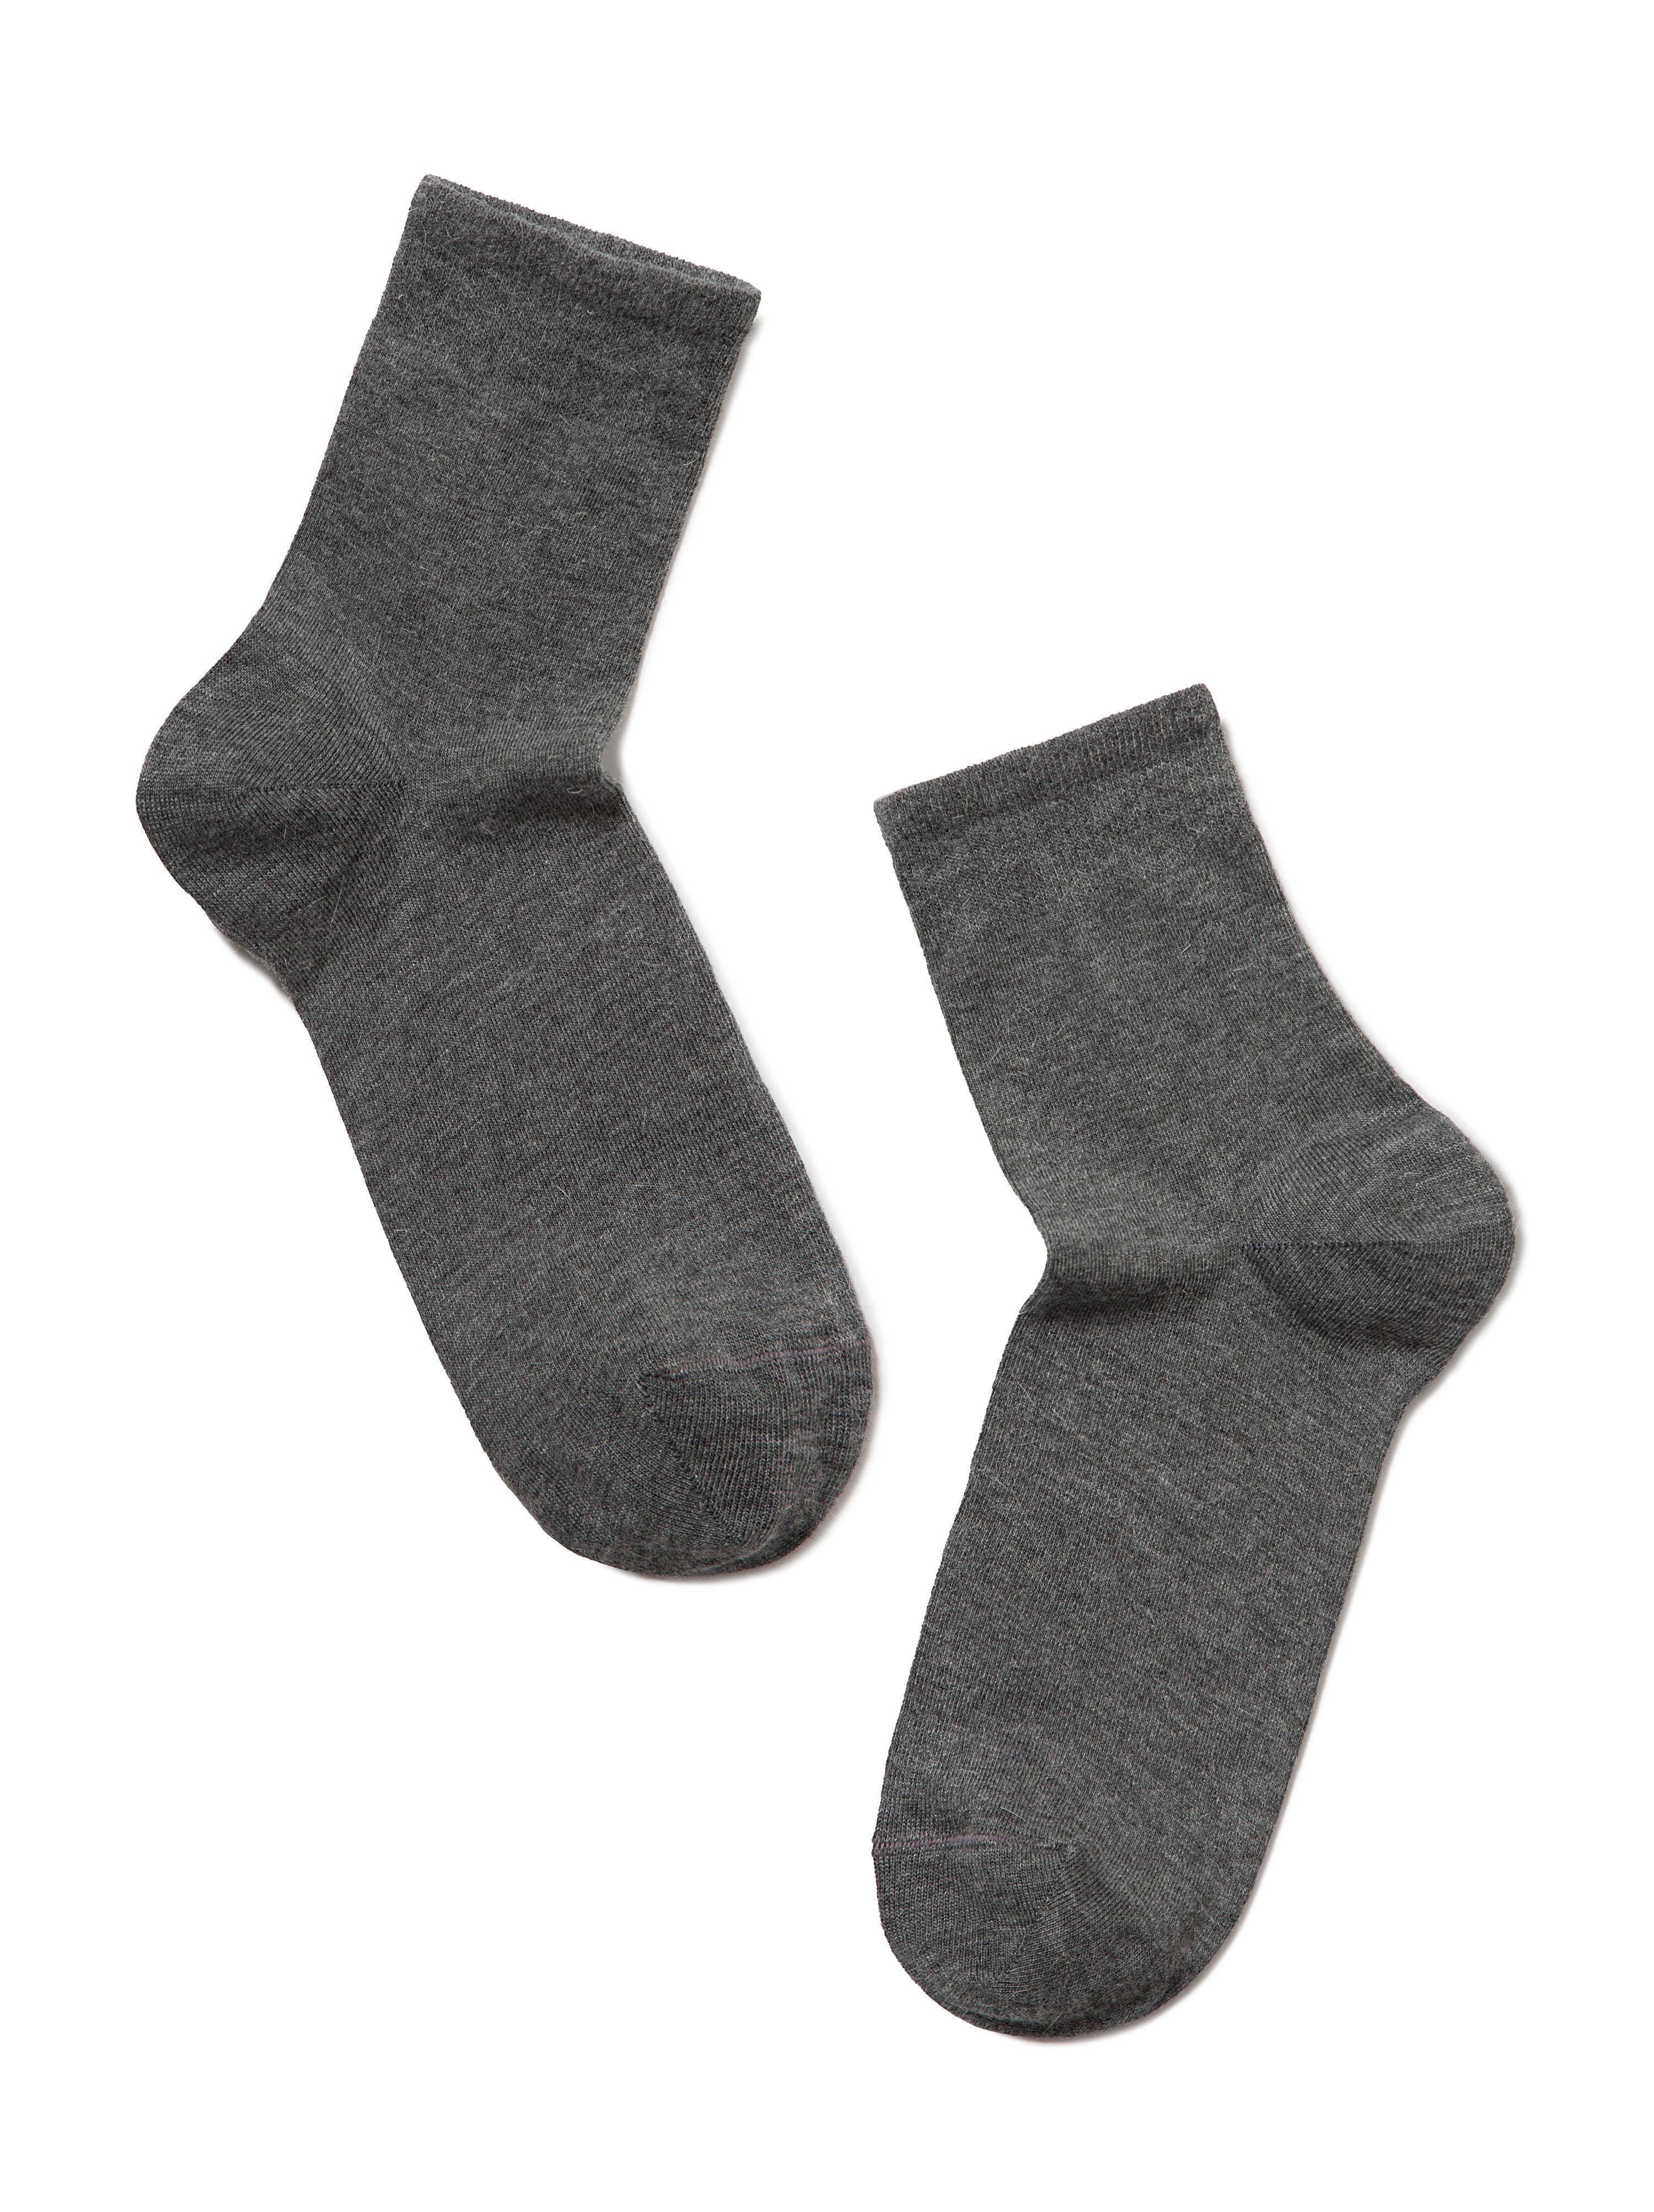 Comfortable soft and warm merino wool women's Socks dark grey color by Conte Elegant